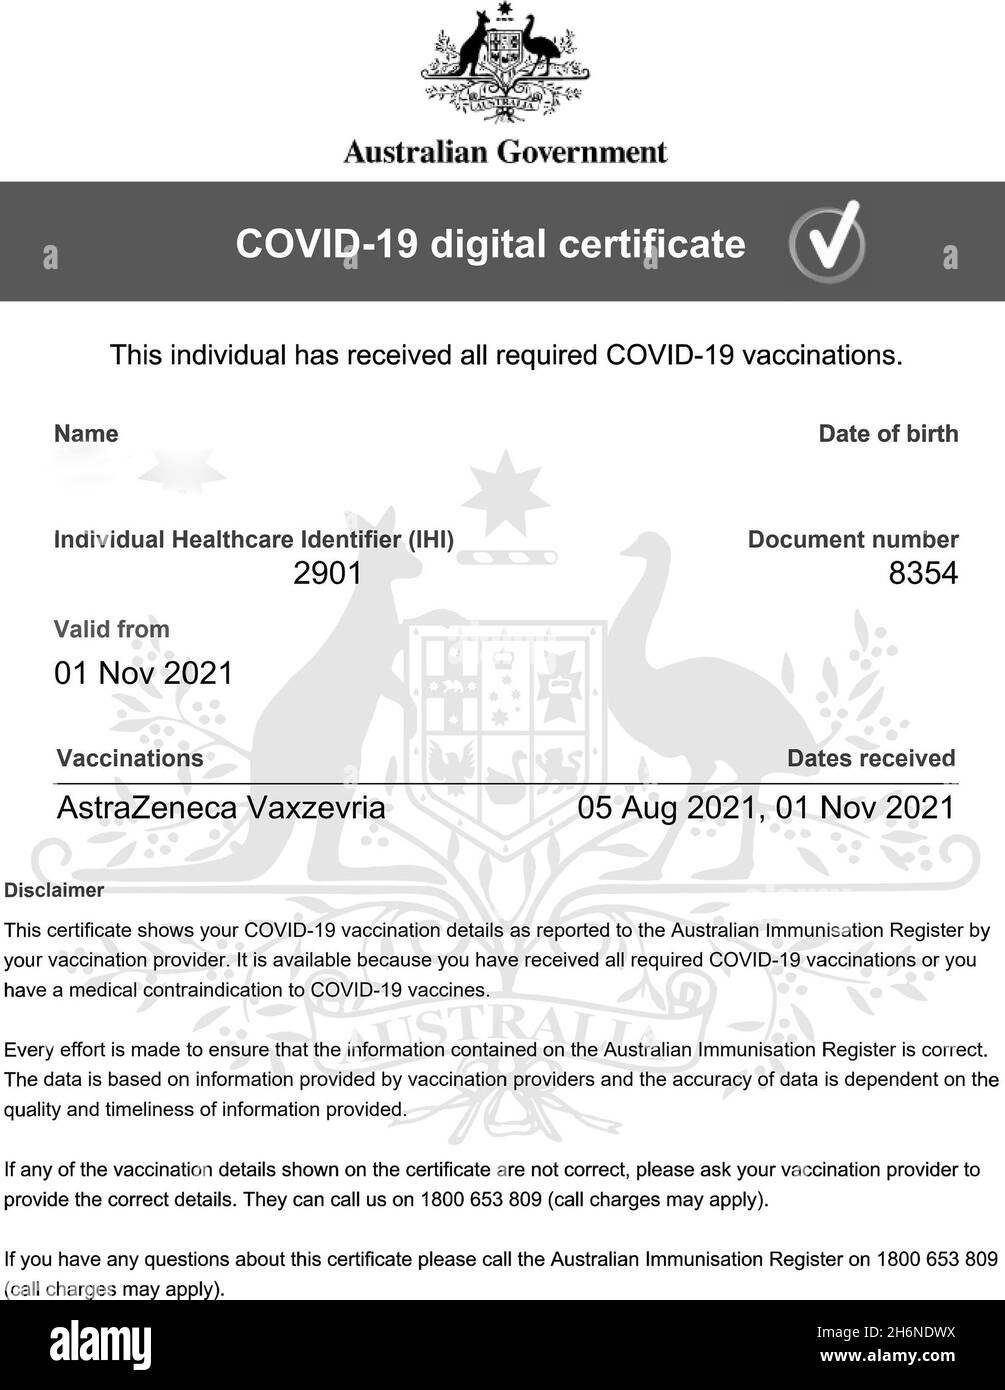 Australian Government Covid-19 digital certificate indicating two doses of AstraZeneca vaccine. Australia Stock Photo